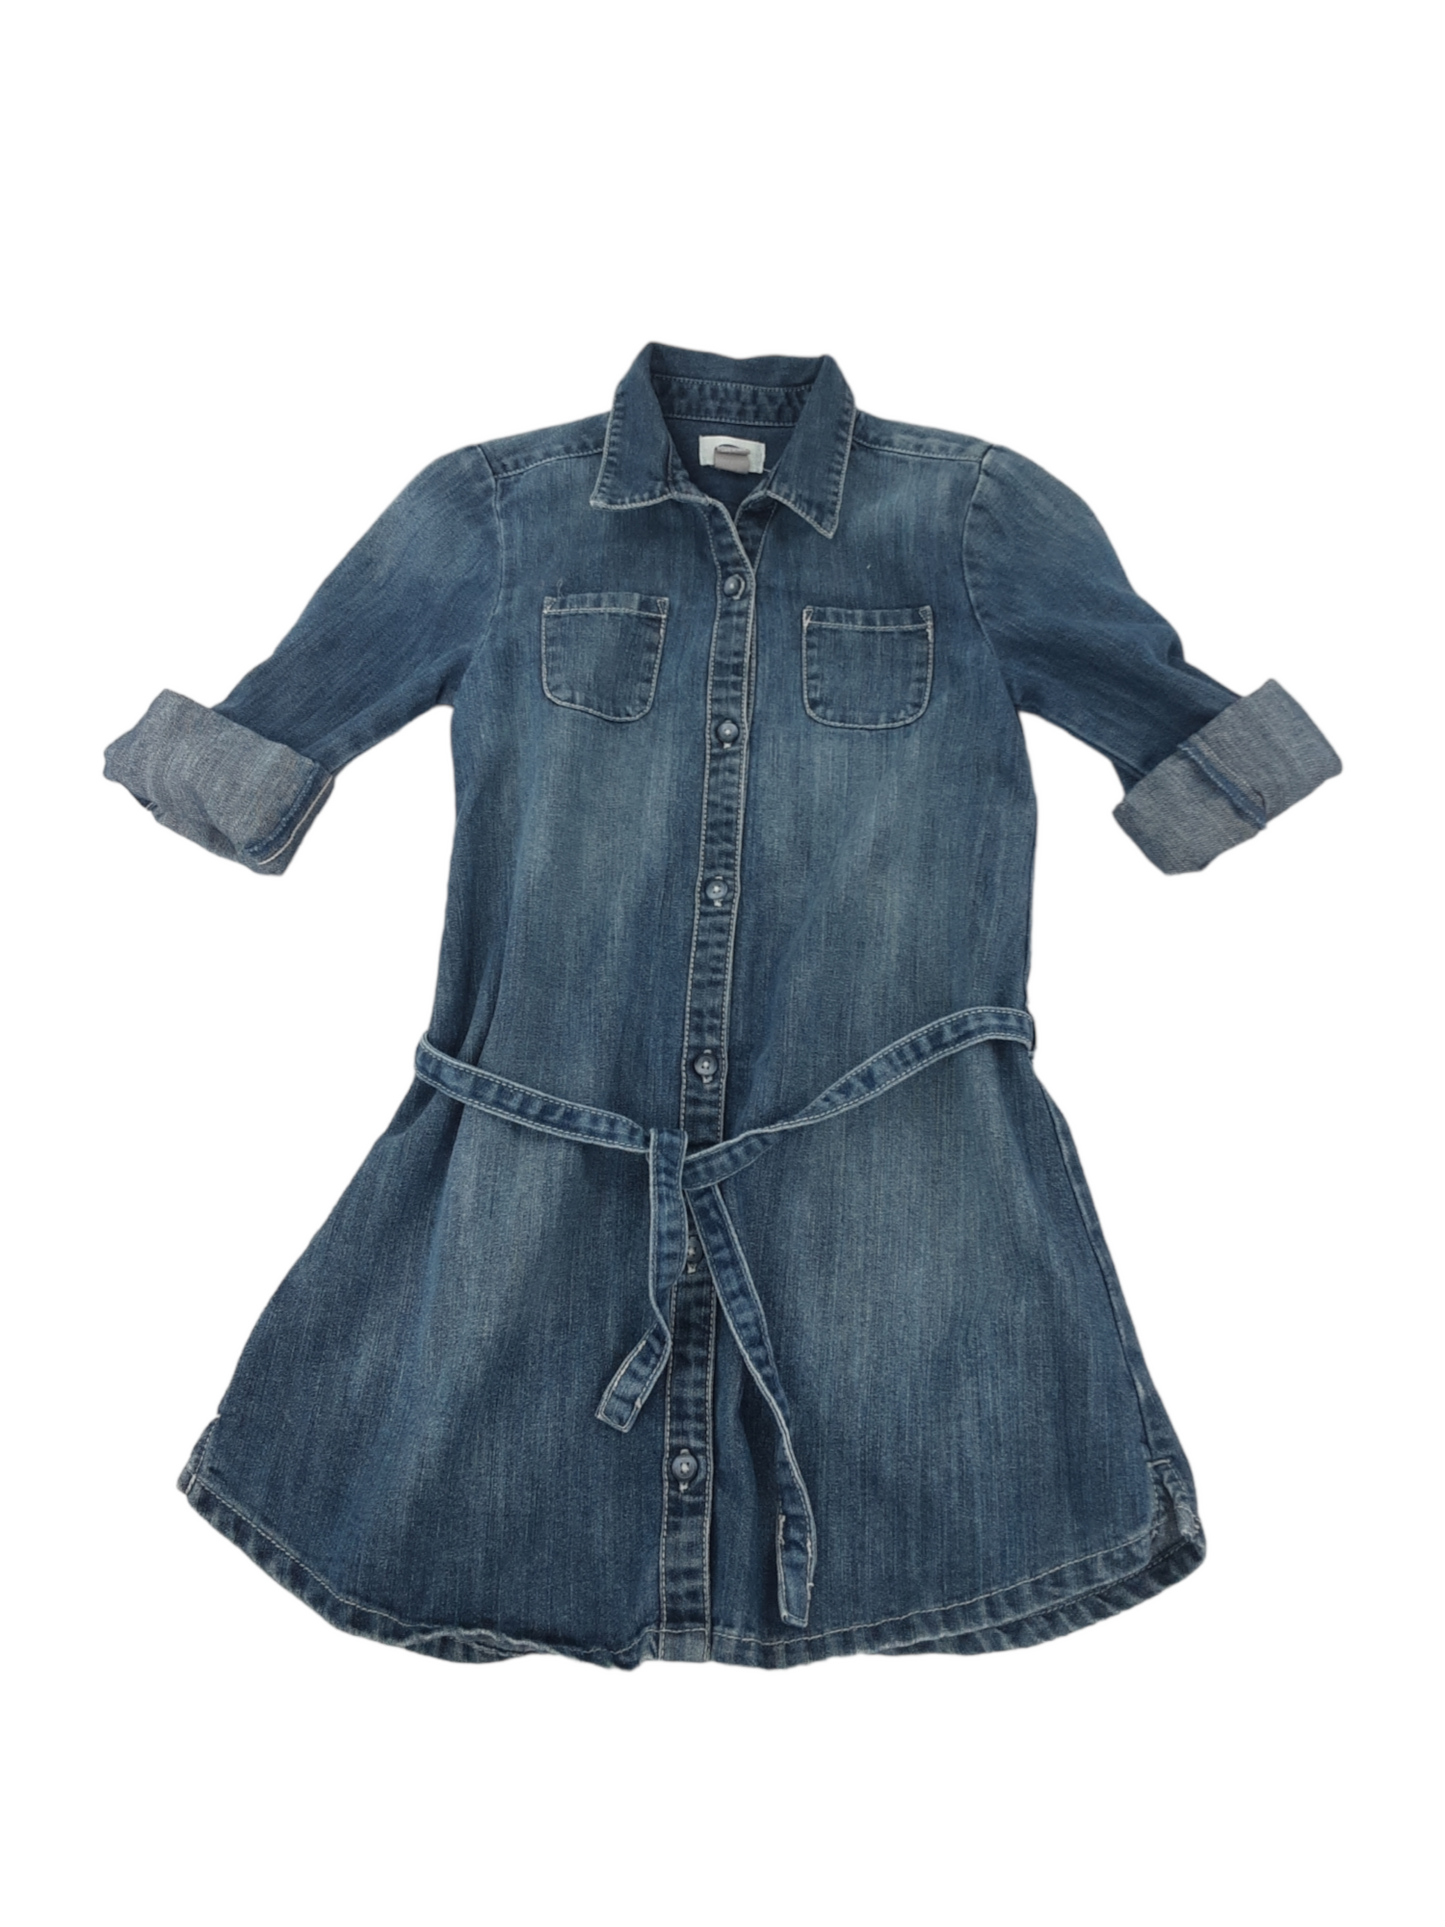 Jean dress size 6-7